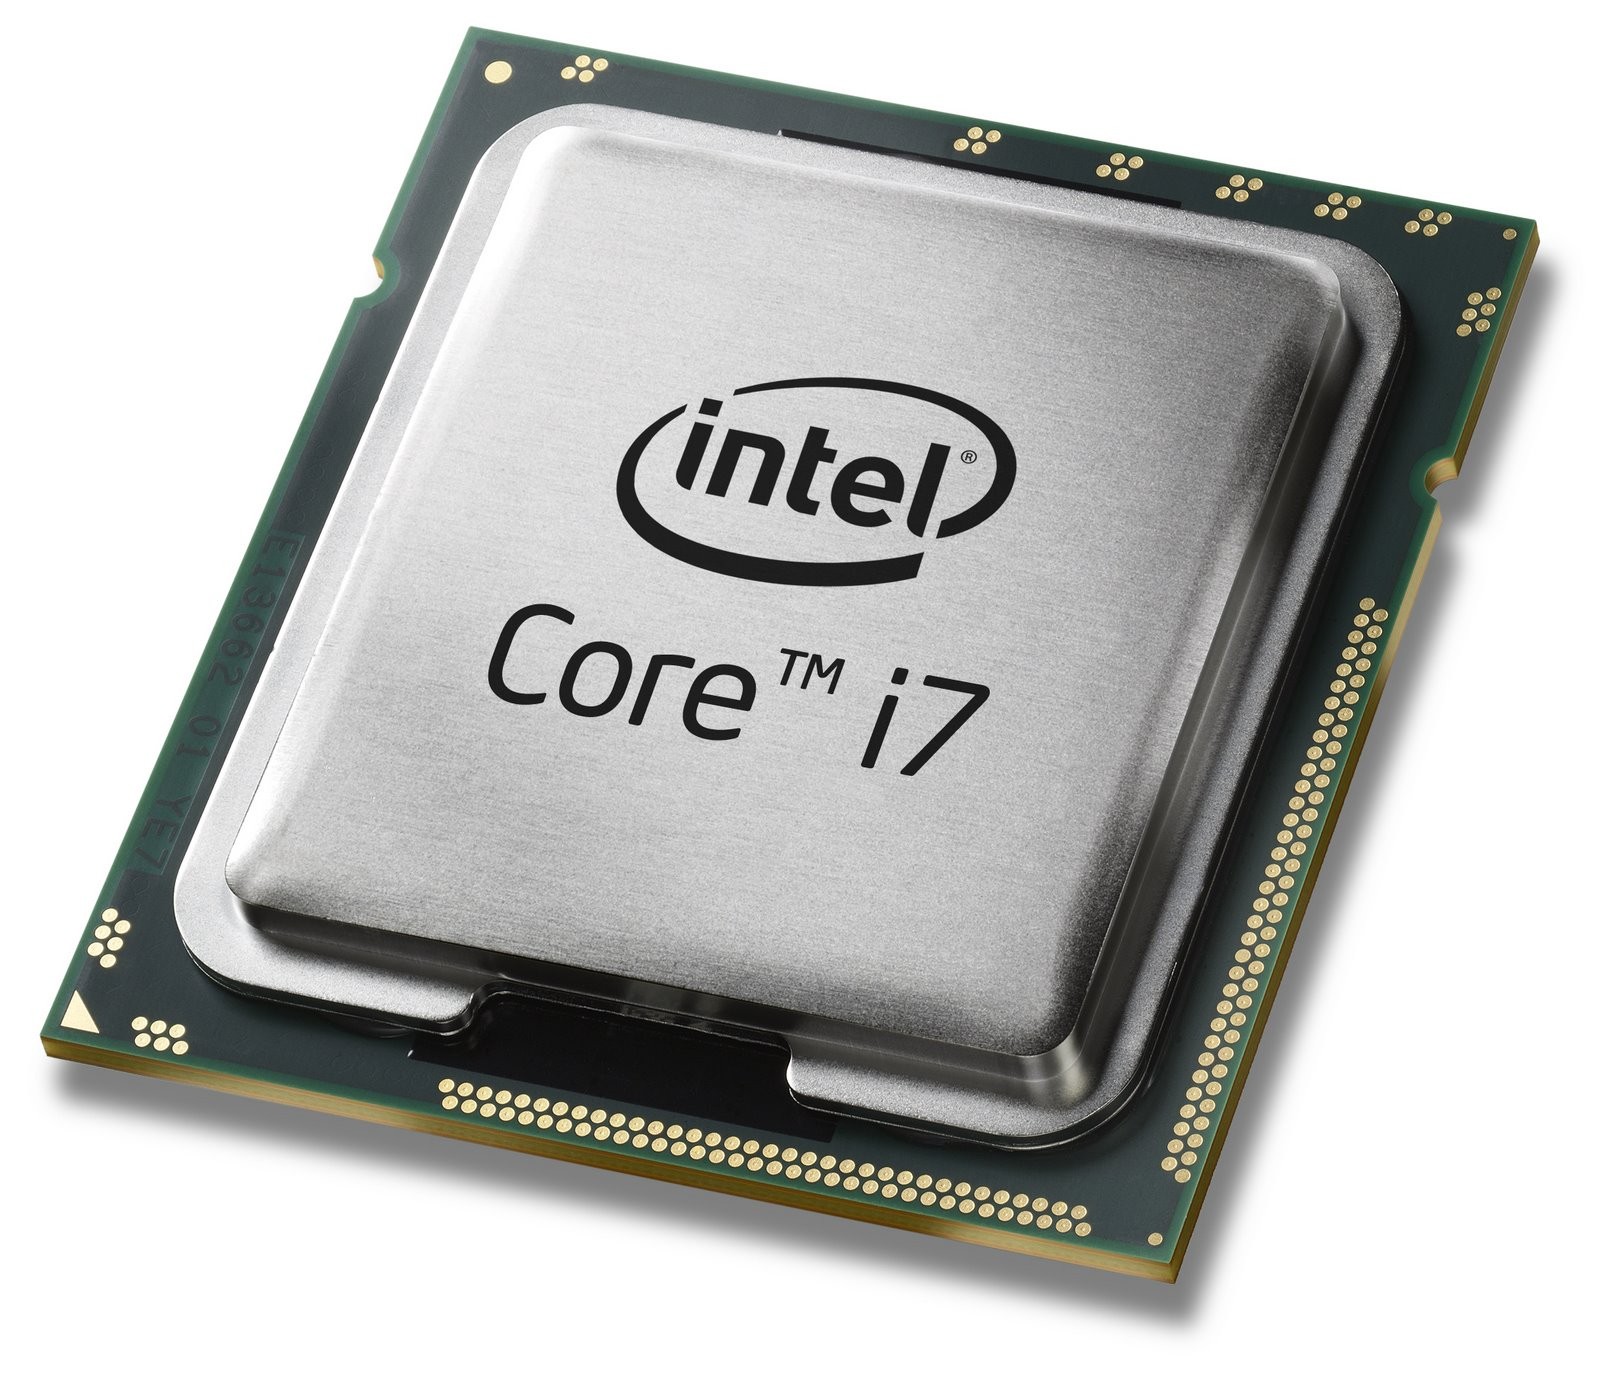 500030219-Intel Core i7-3770T SR0PQ 2.5Ghz 5GT/s LGA 1155 Processor-image